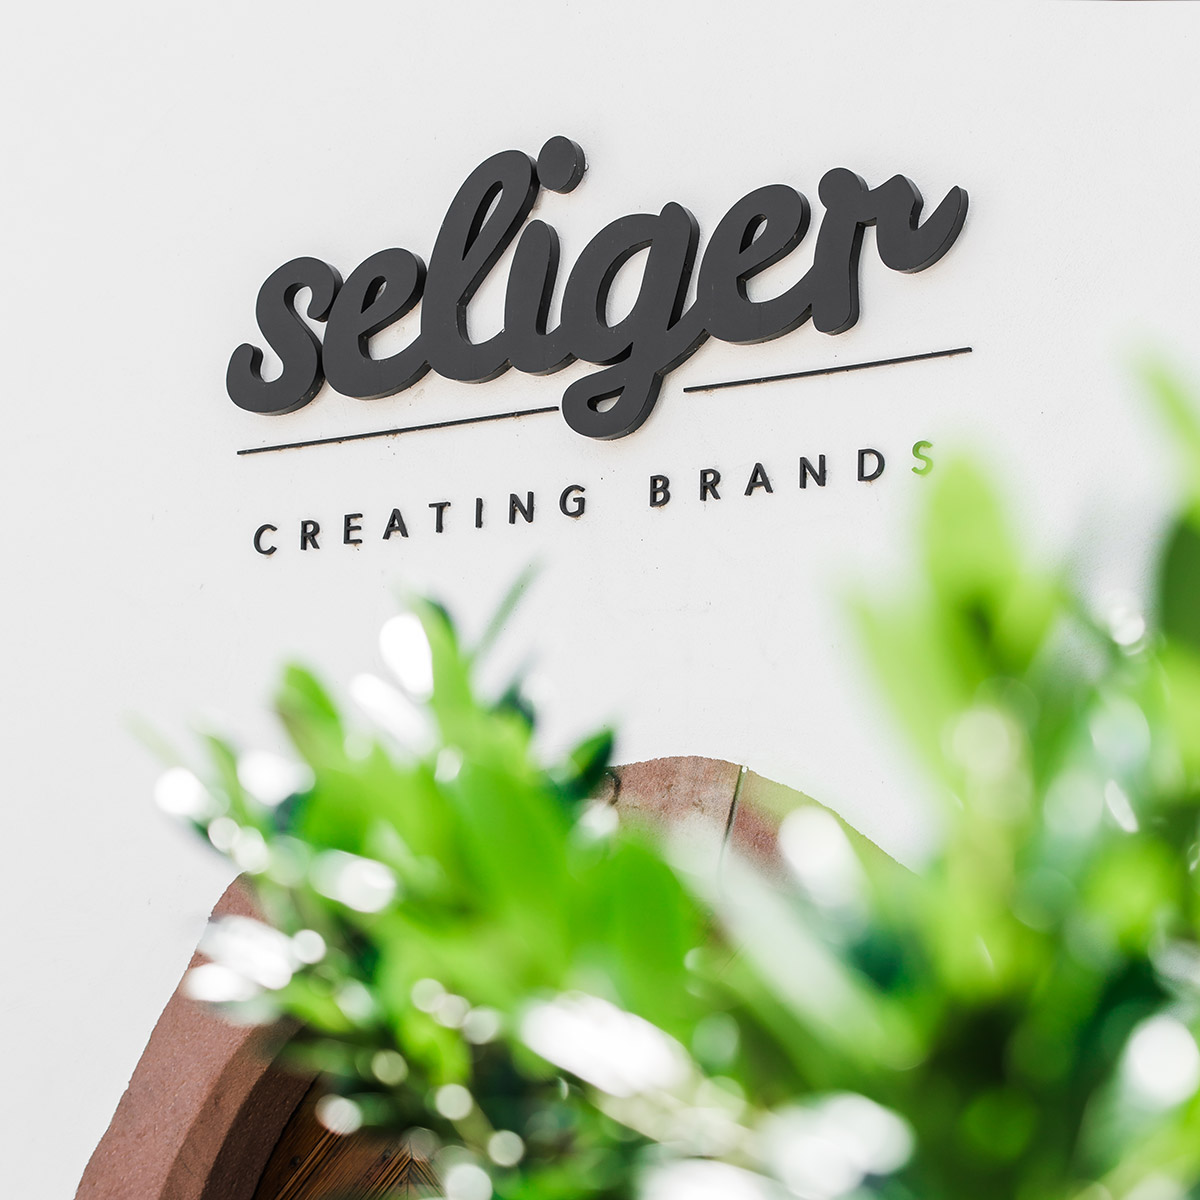 Seliger Brands GmbH